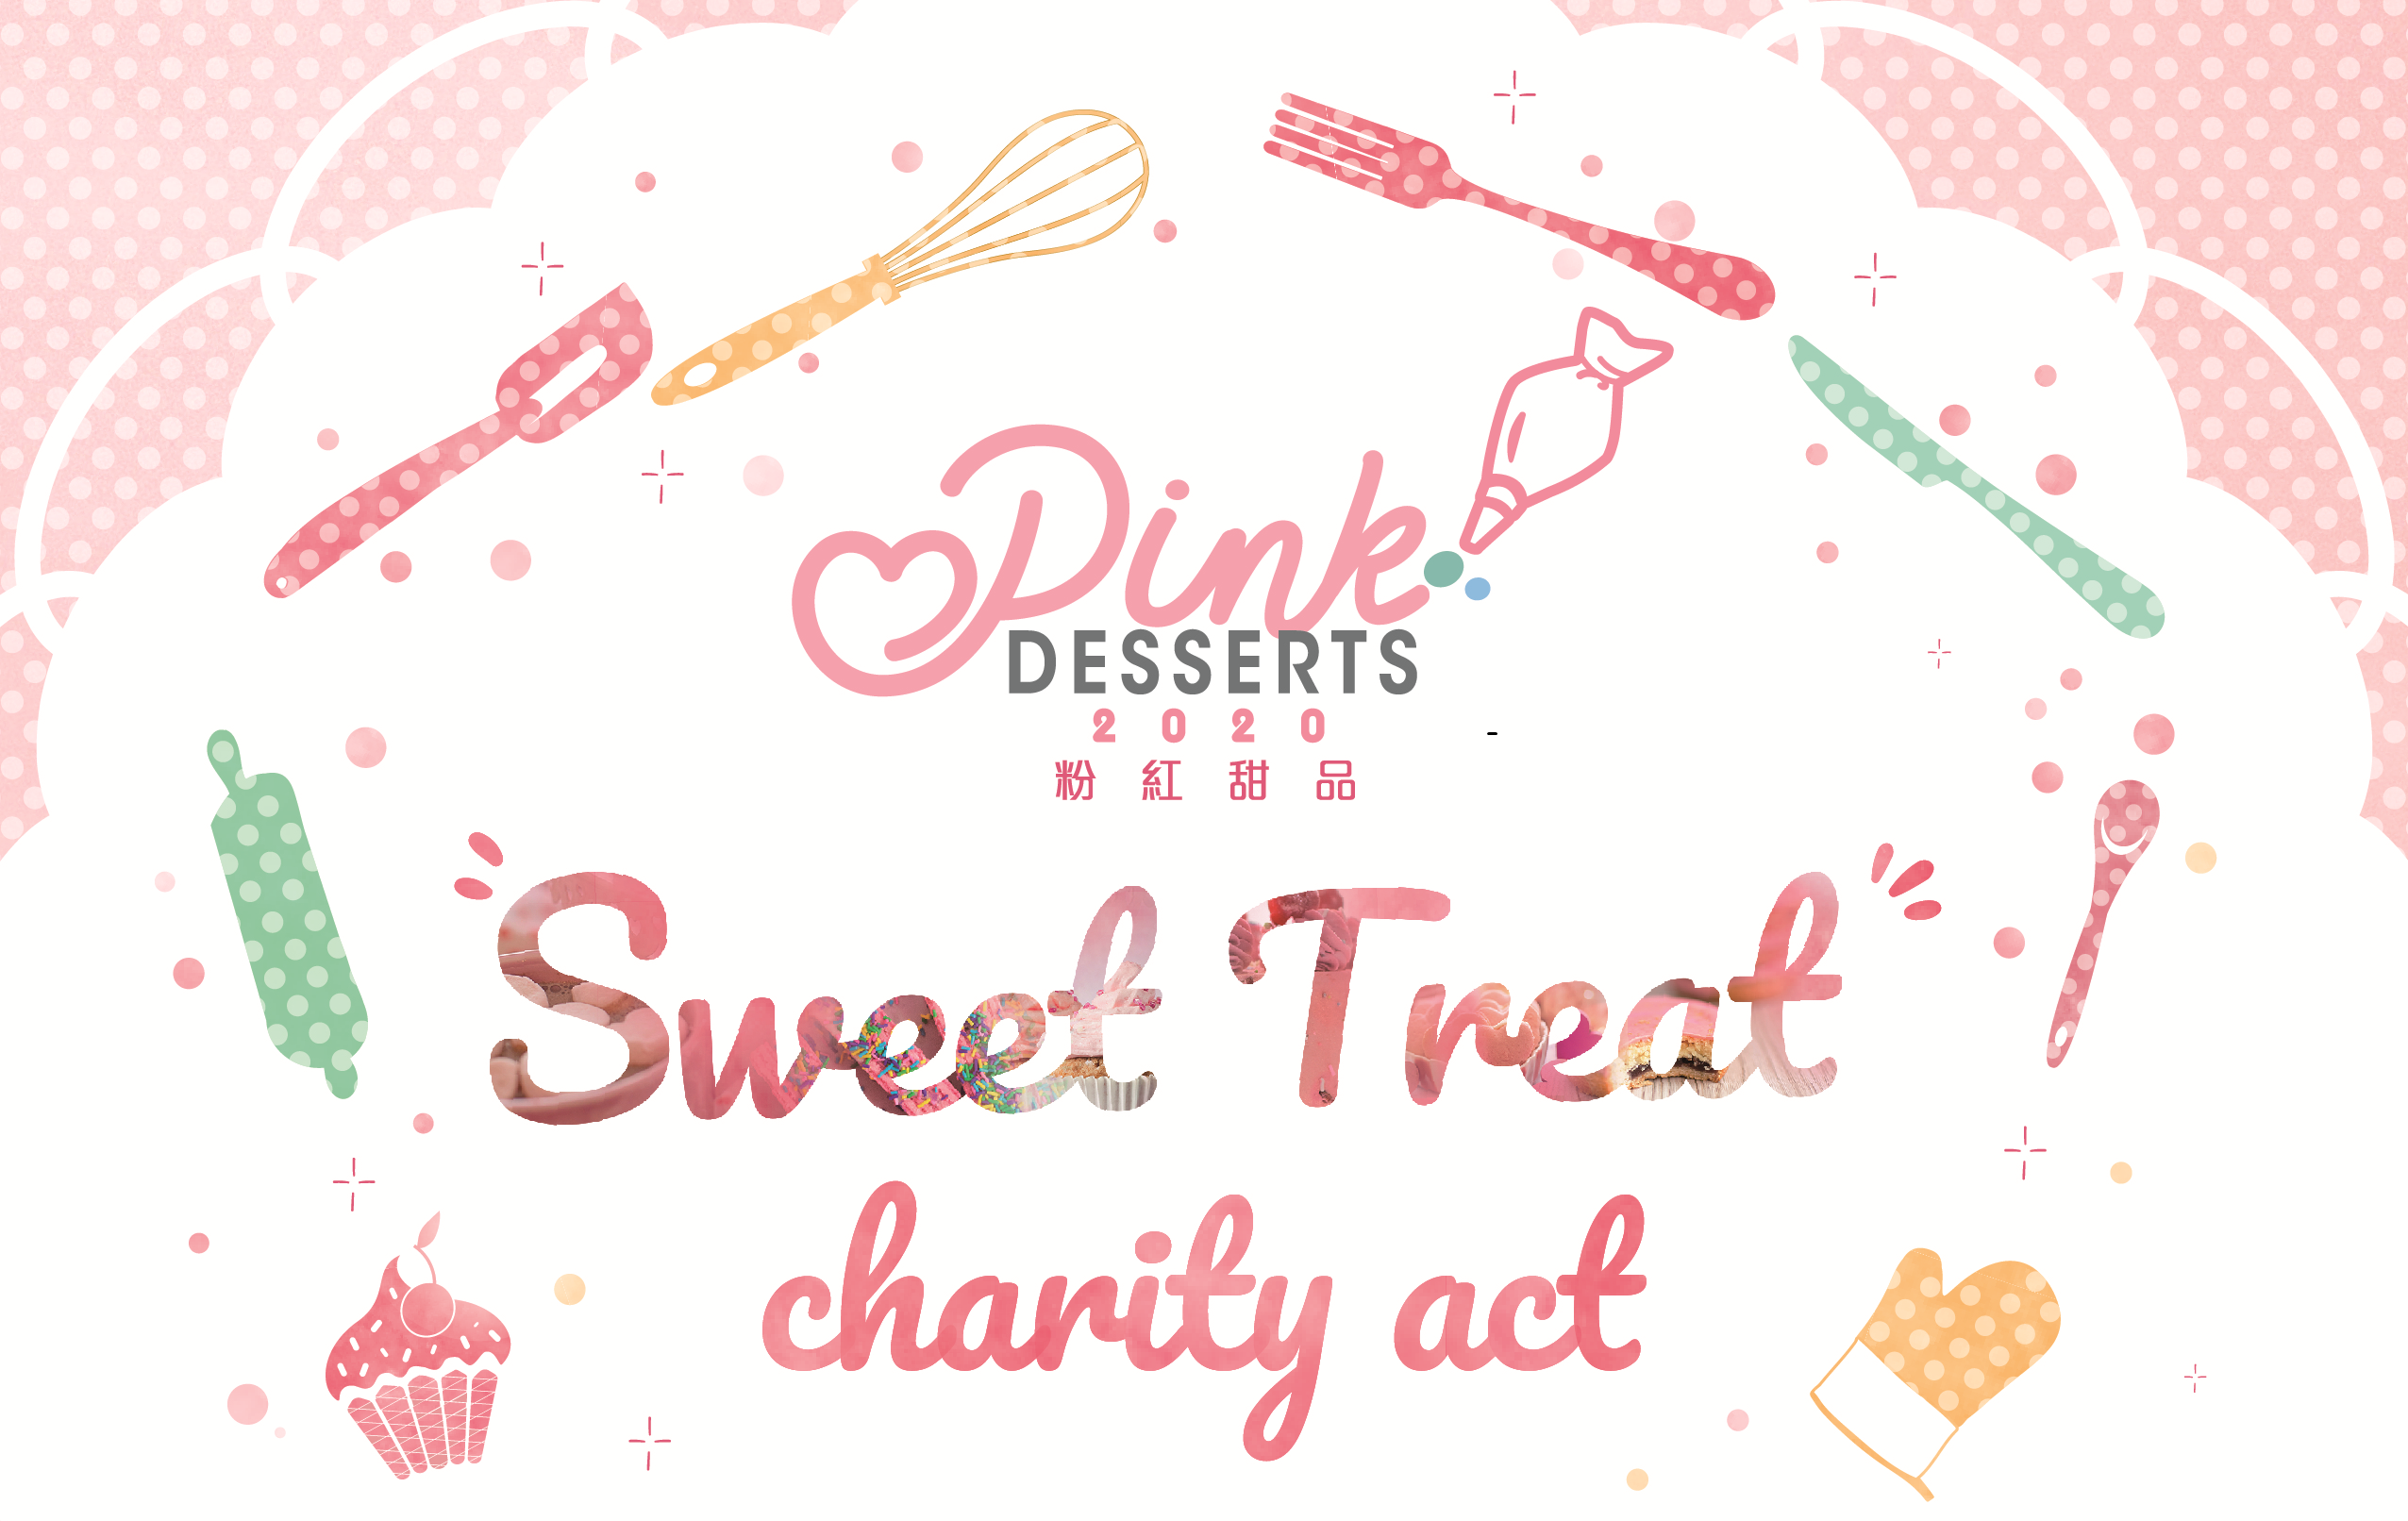 Sweet Treat Charity Act